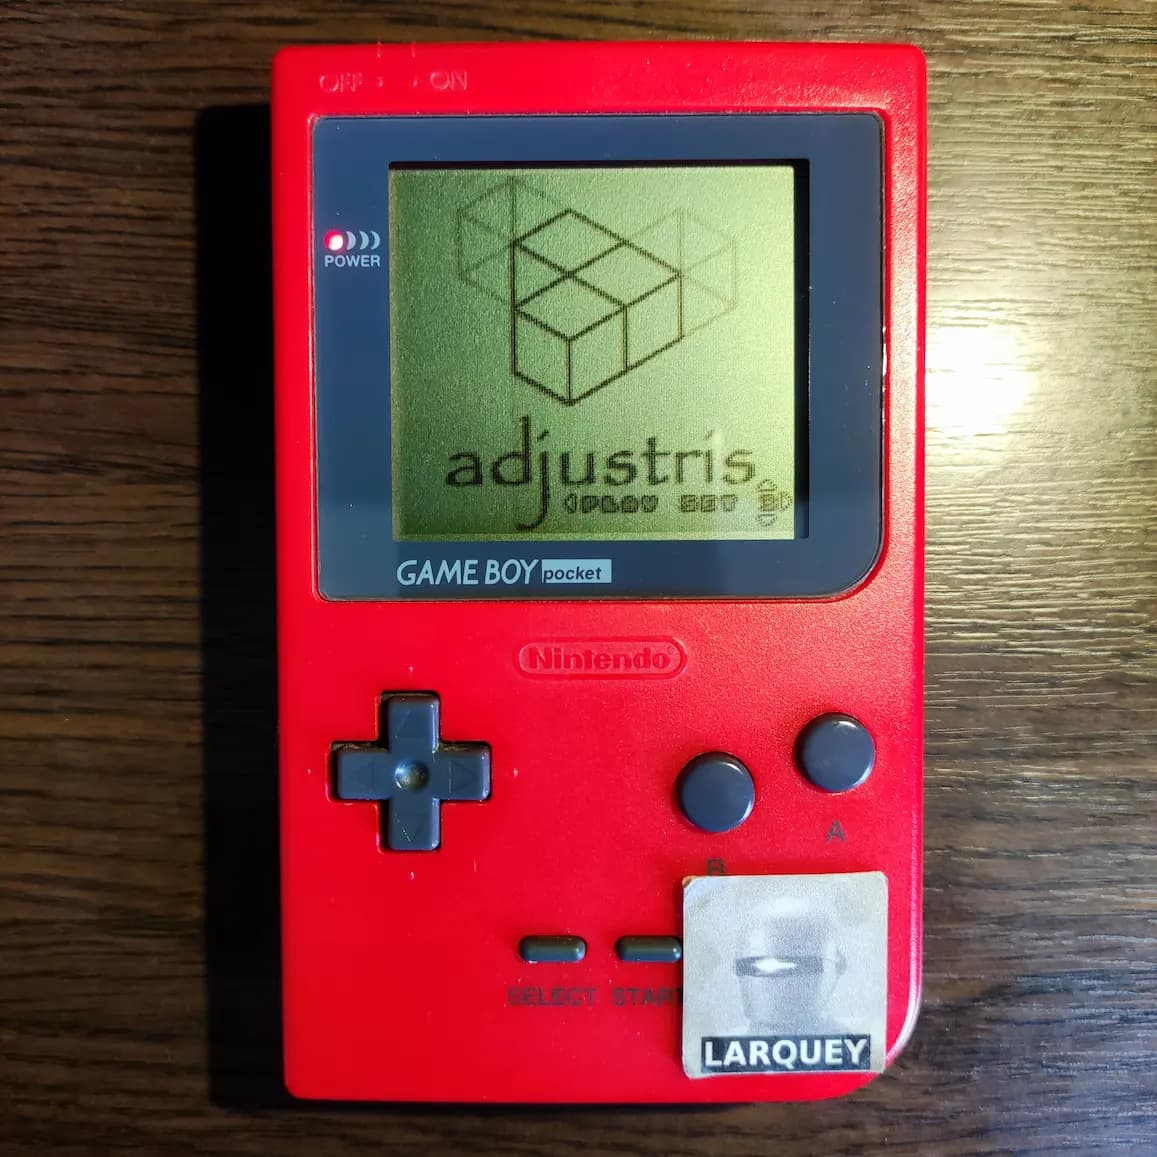 Larquey: Adjustris [Set 3] (Game Boy) 439 points on 2022-08-06 02:04:31